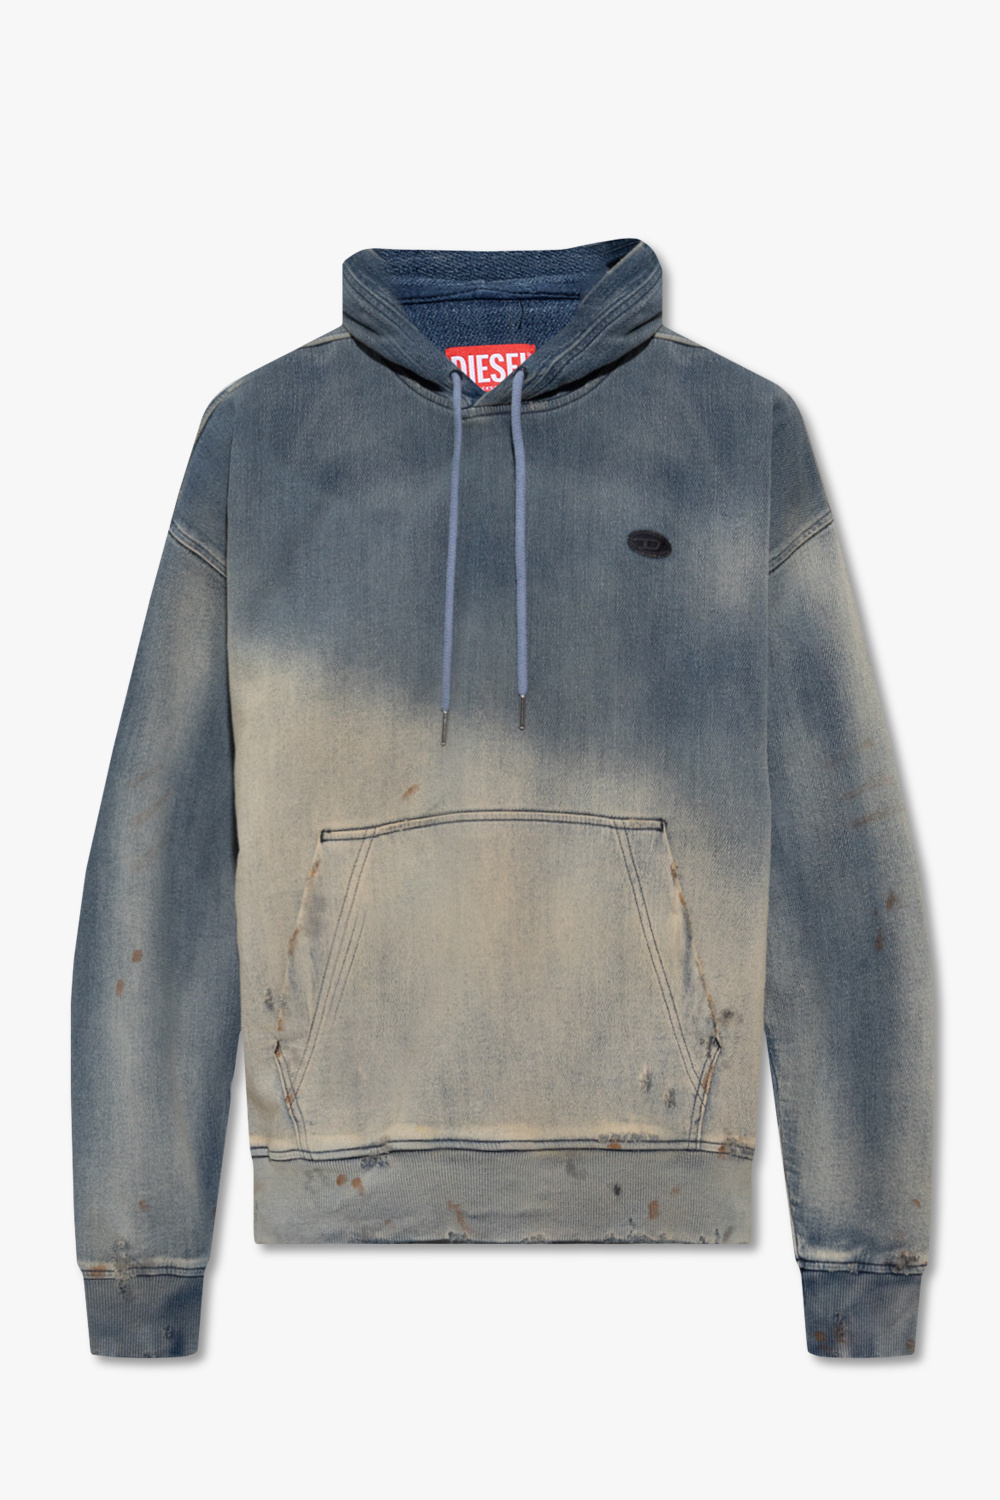 UM - NE\' denim hoodie Diesel - alpha industries basic os heavy t shirt dark  olive - StclaircomoShops GB - Blue \'D - RIB